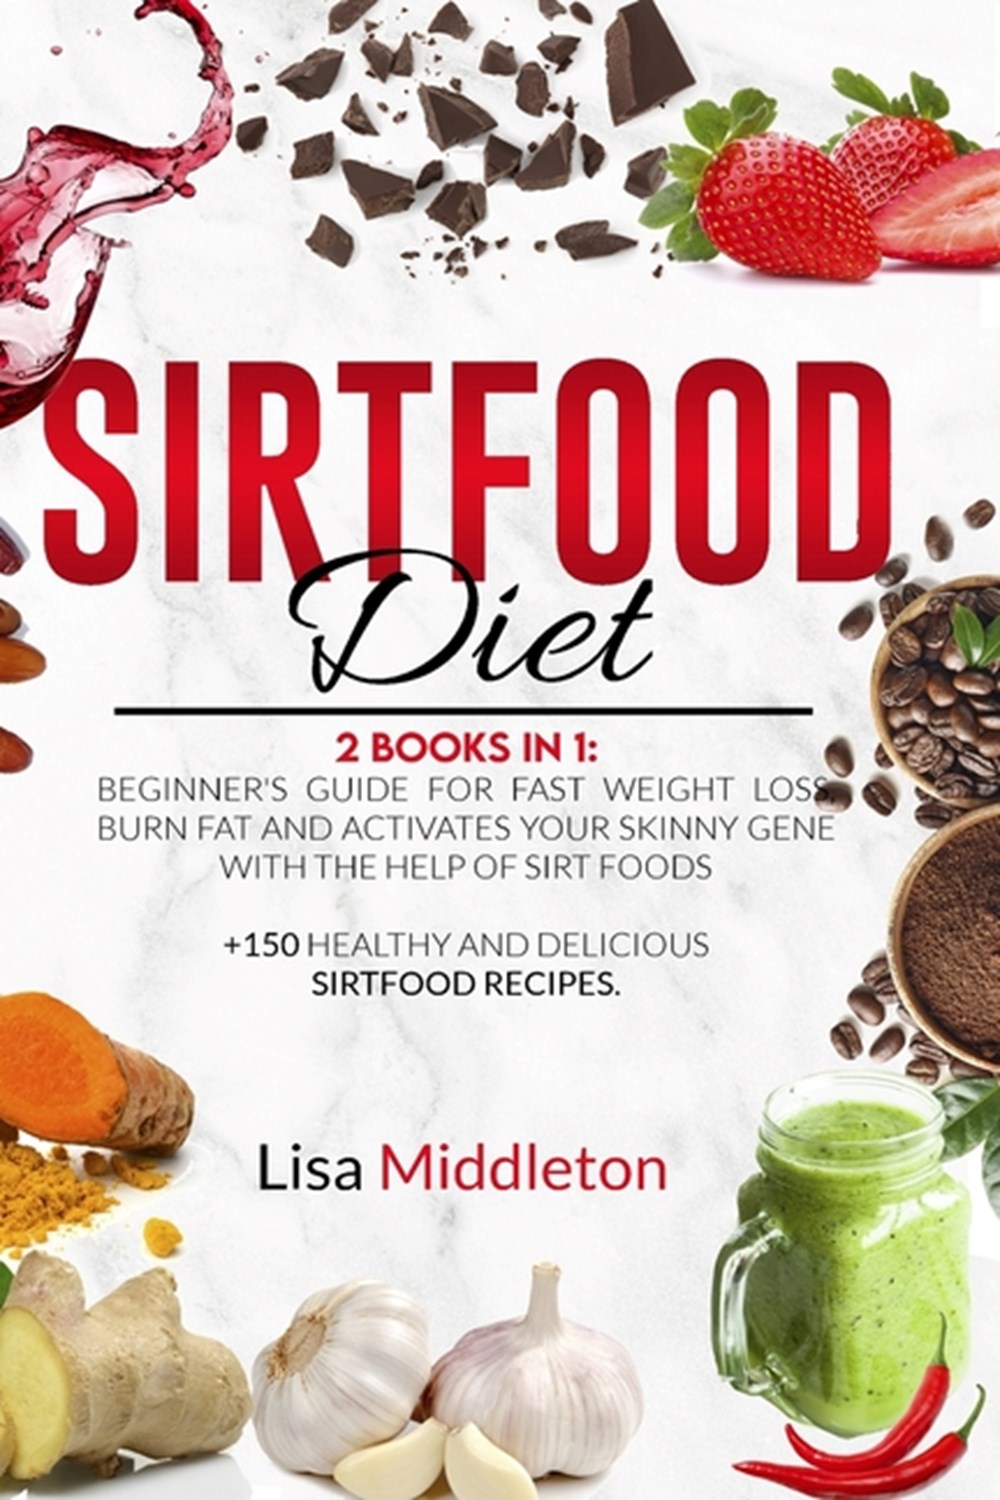 Sirtfood Diet - Sirtfood Diet Food List - Drawbacks Of The Sirtfood Diet